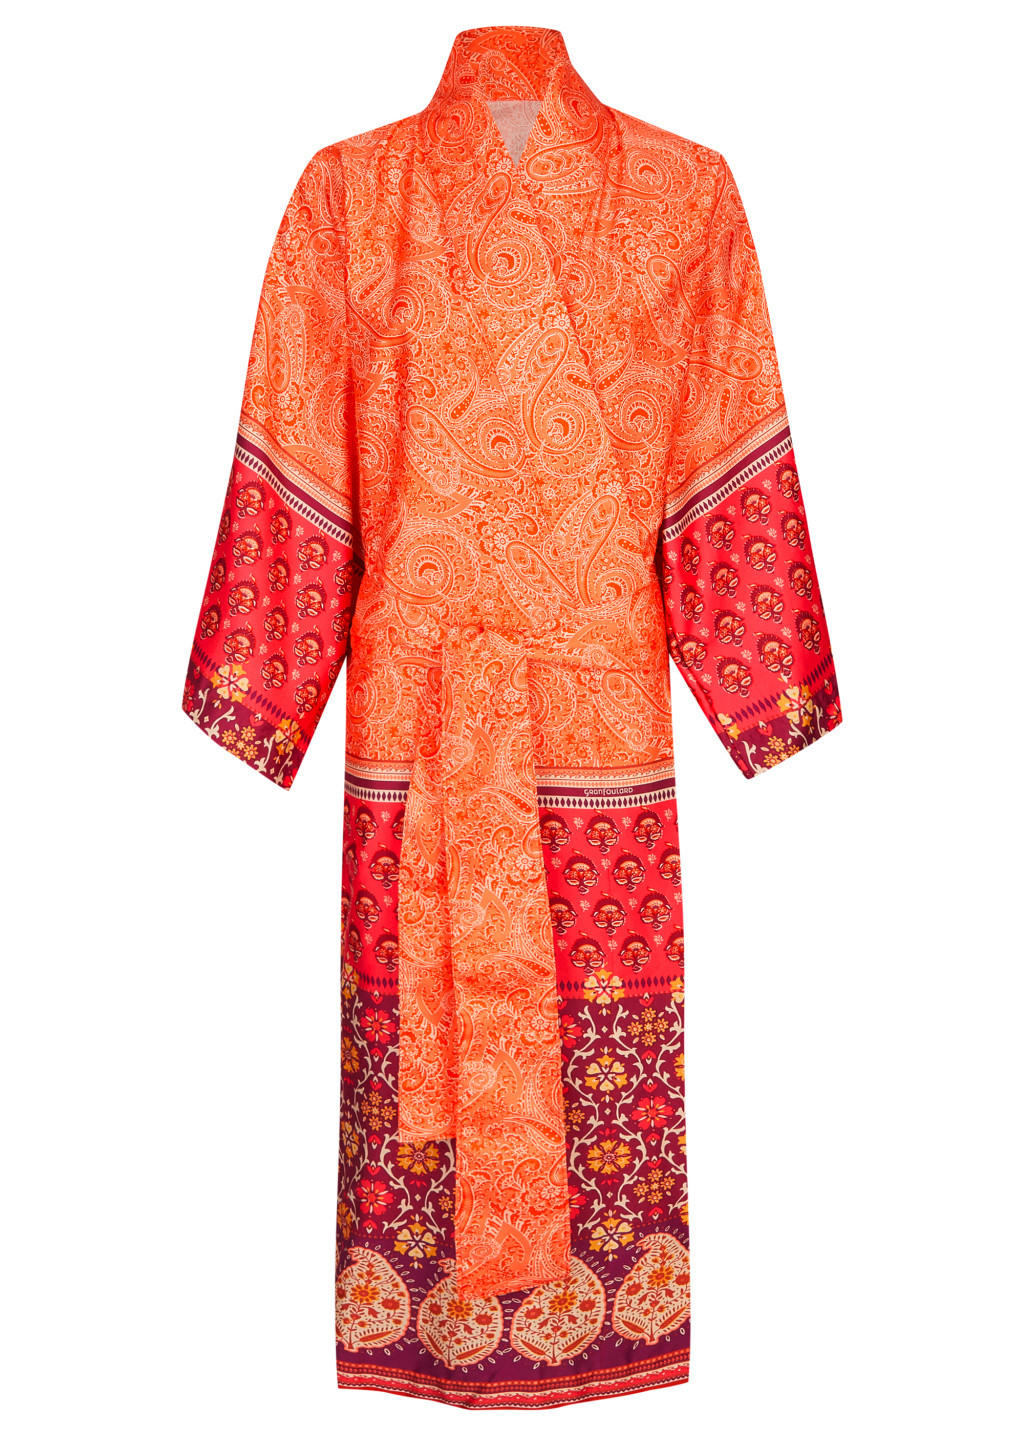 KIMONO LAGLIO  - Orange, LIFESTYLE, Textil (S/Mnull) - Bassetti